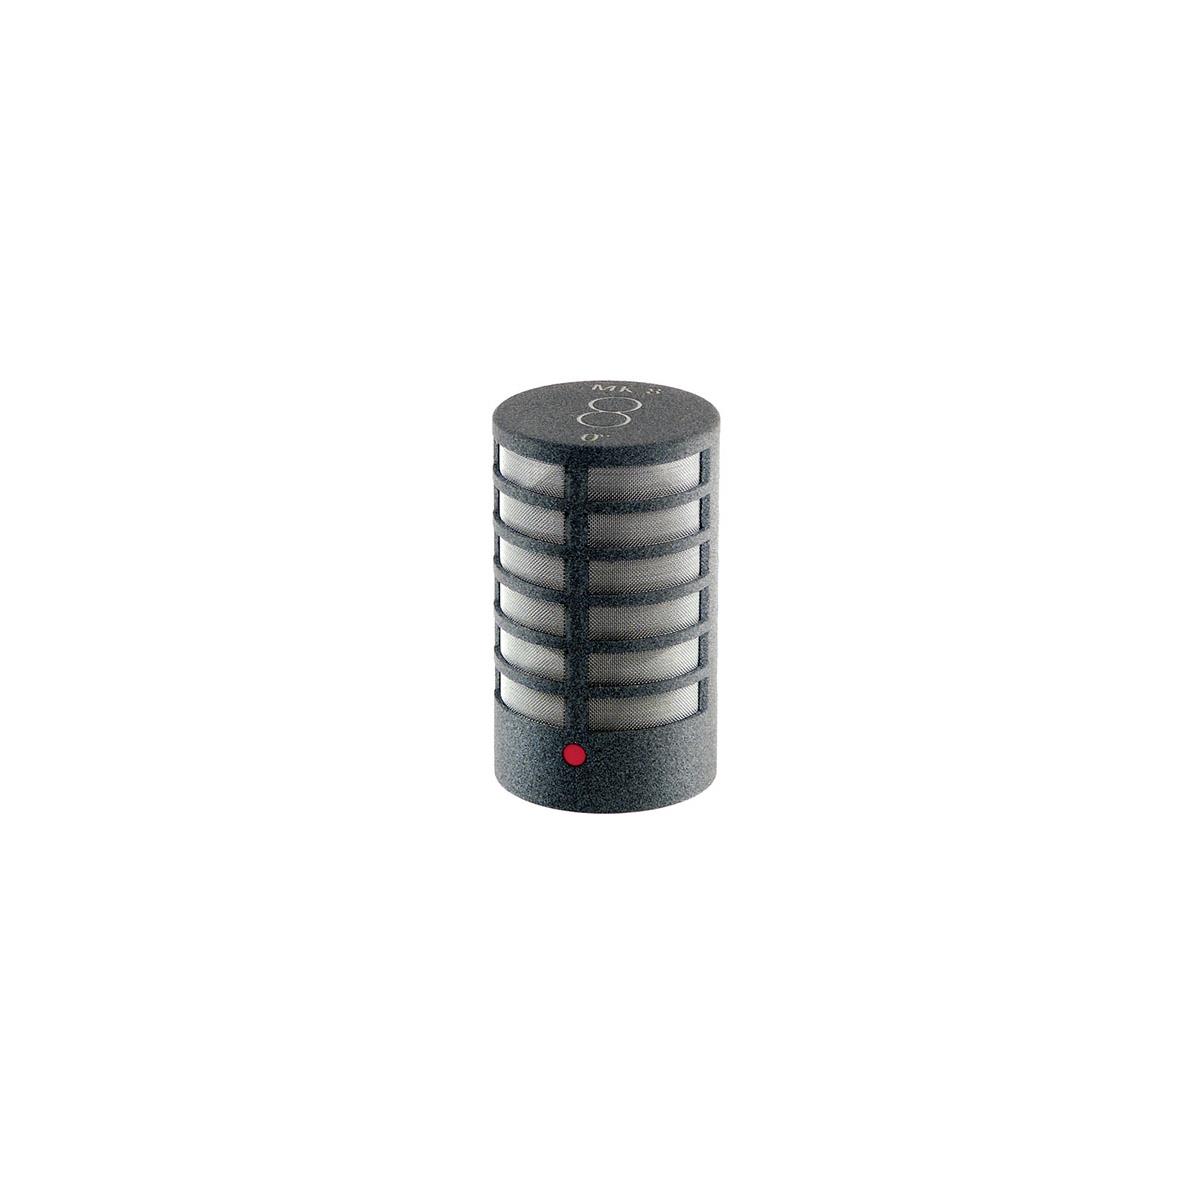 Image of Schoeps MK8 Bi-Directional Microphone Capsule